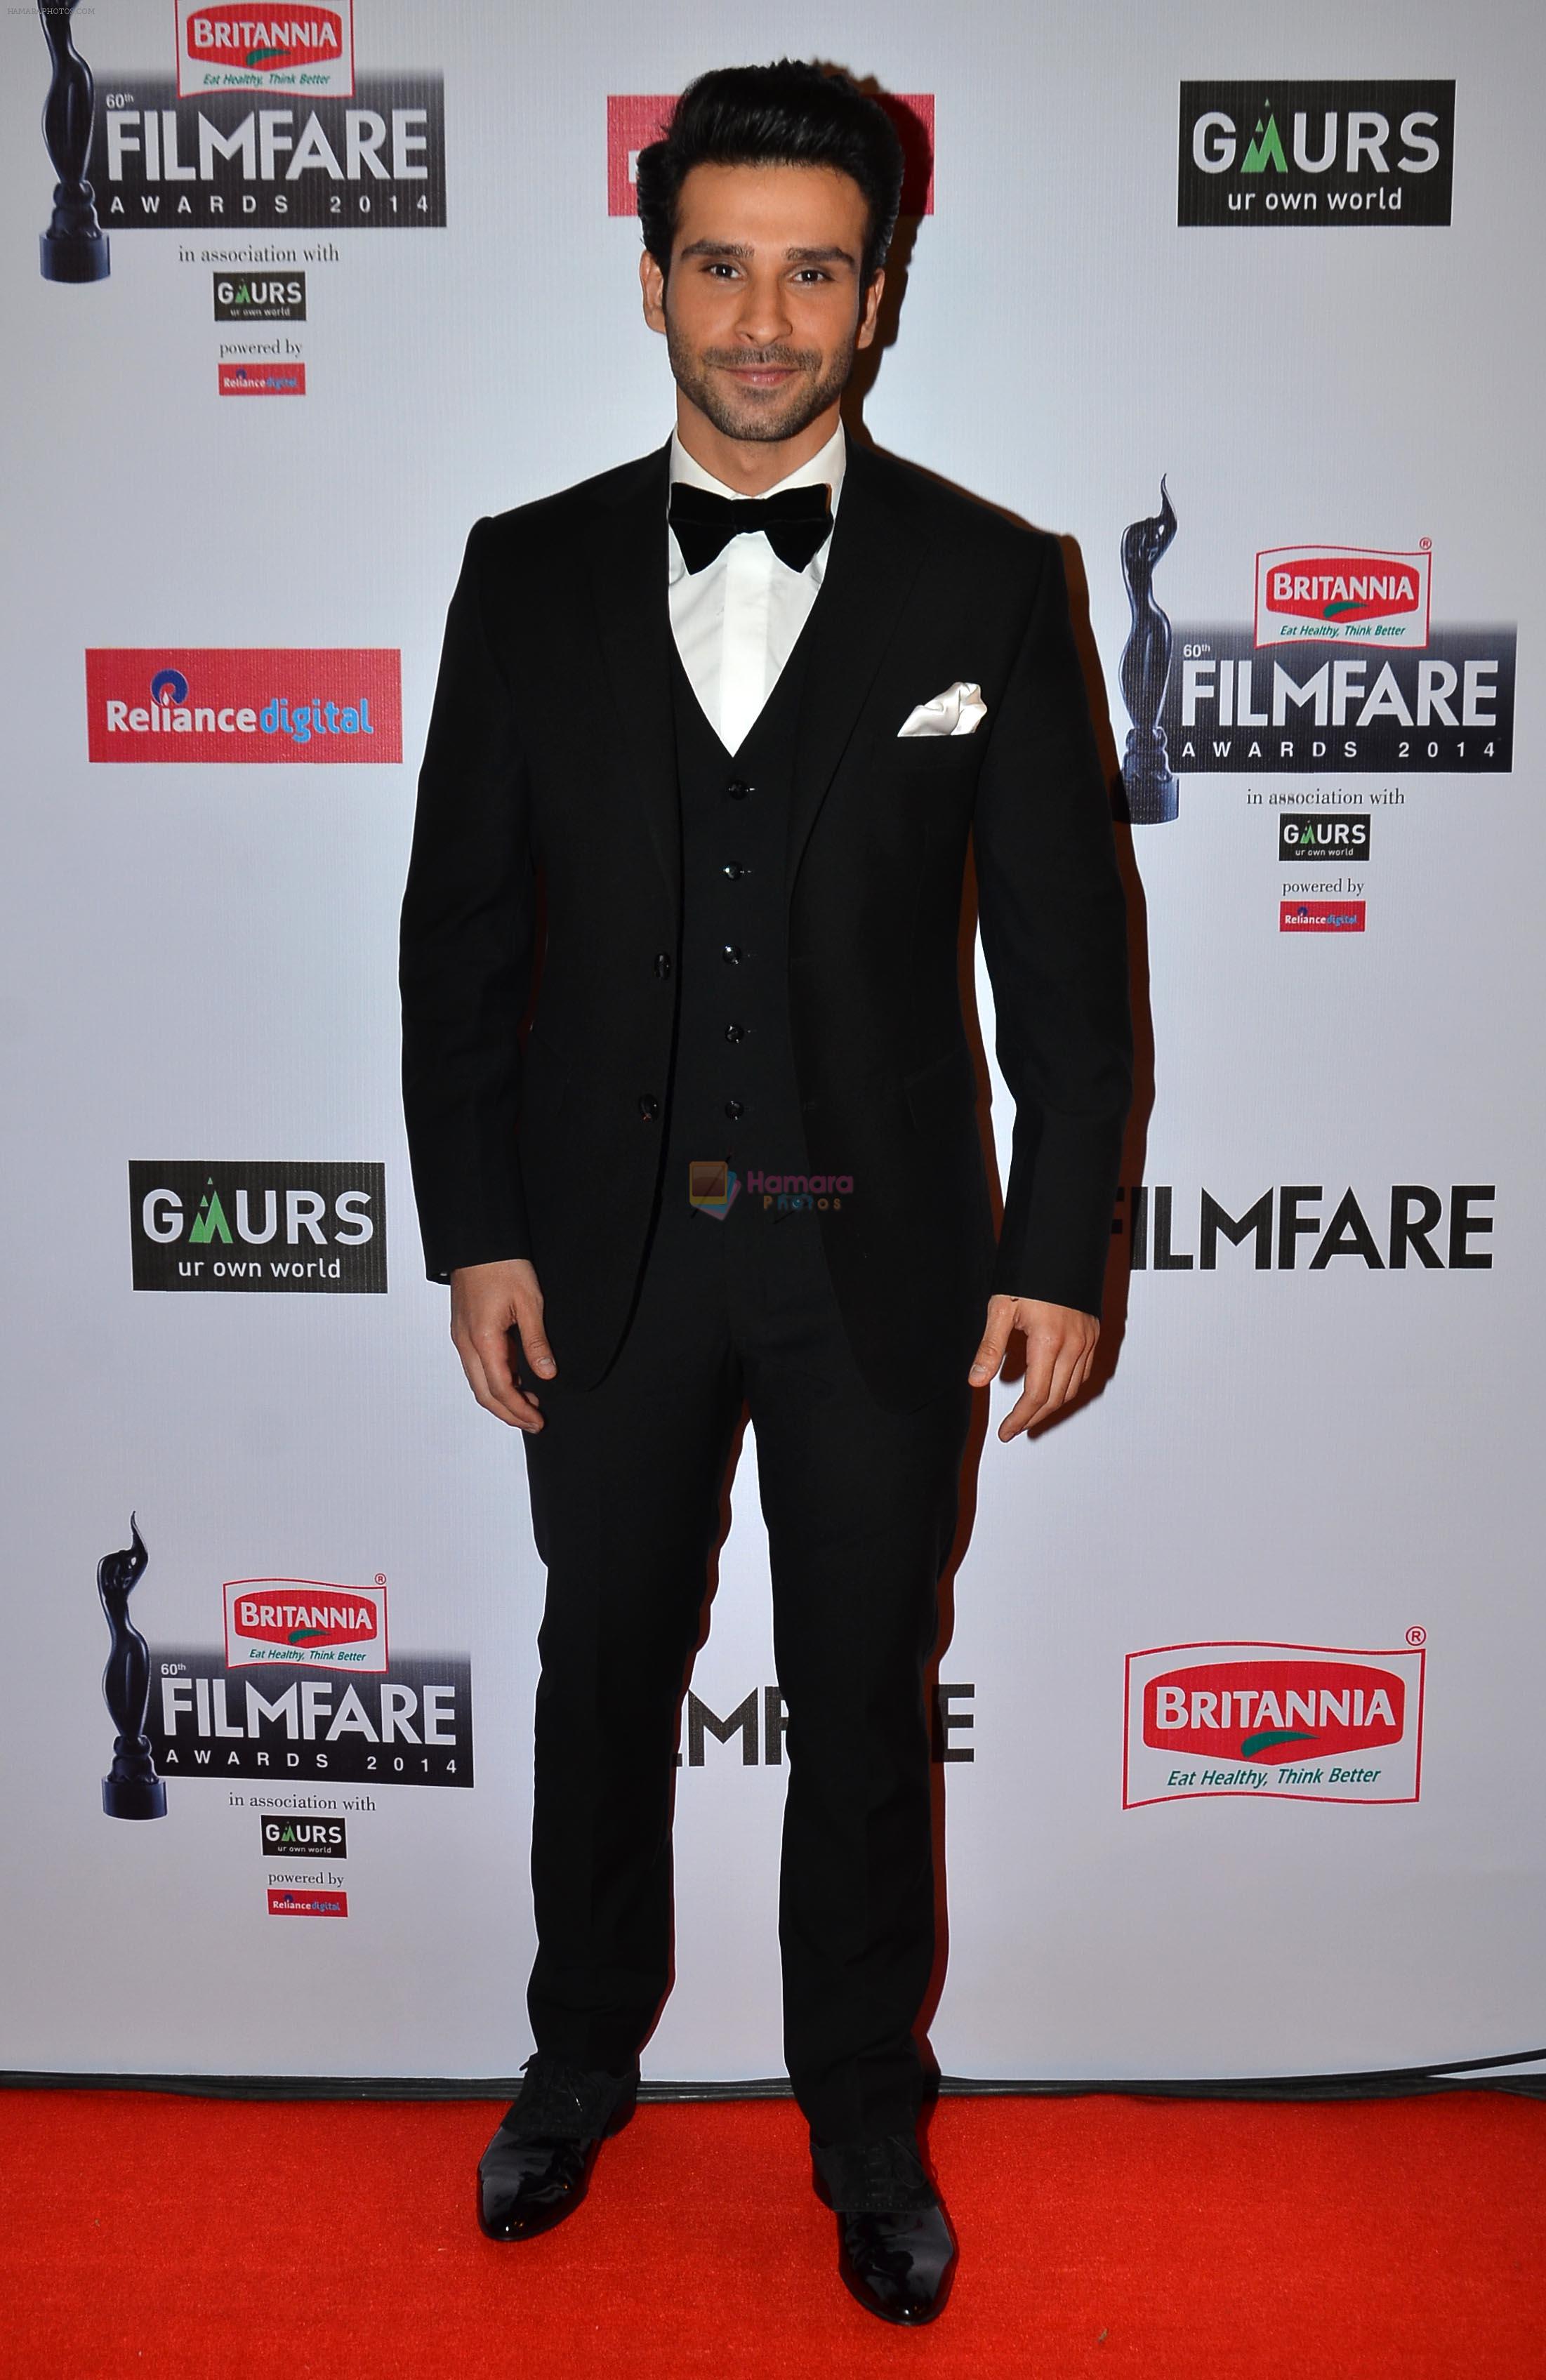 Girish Taurani graces the red carpet at the 60th Britannia Filmfare Awards